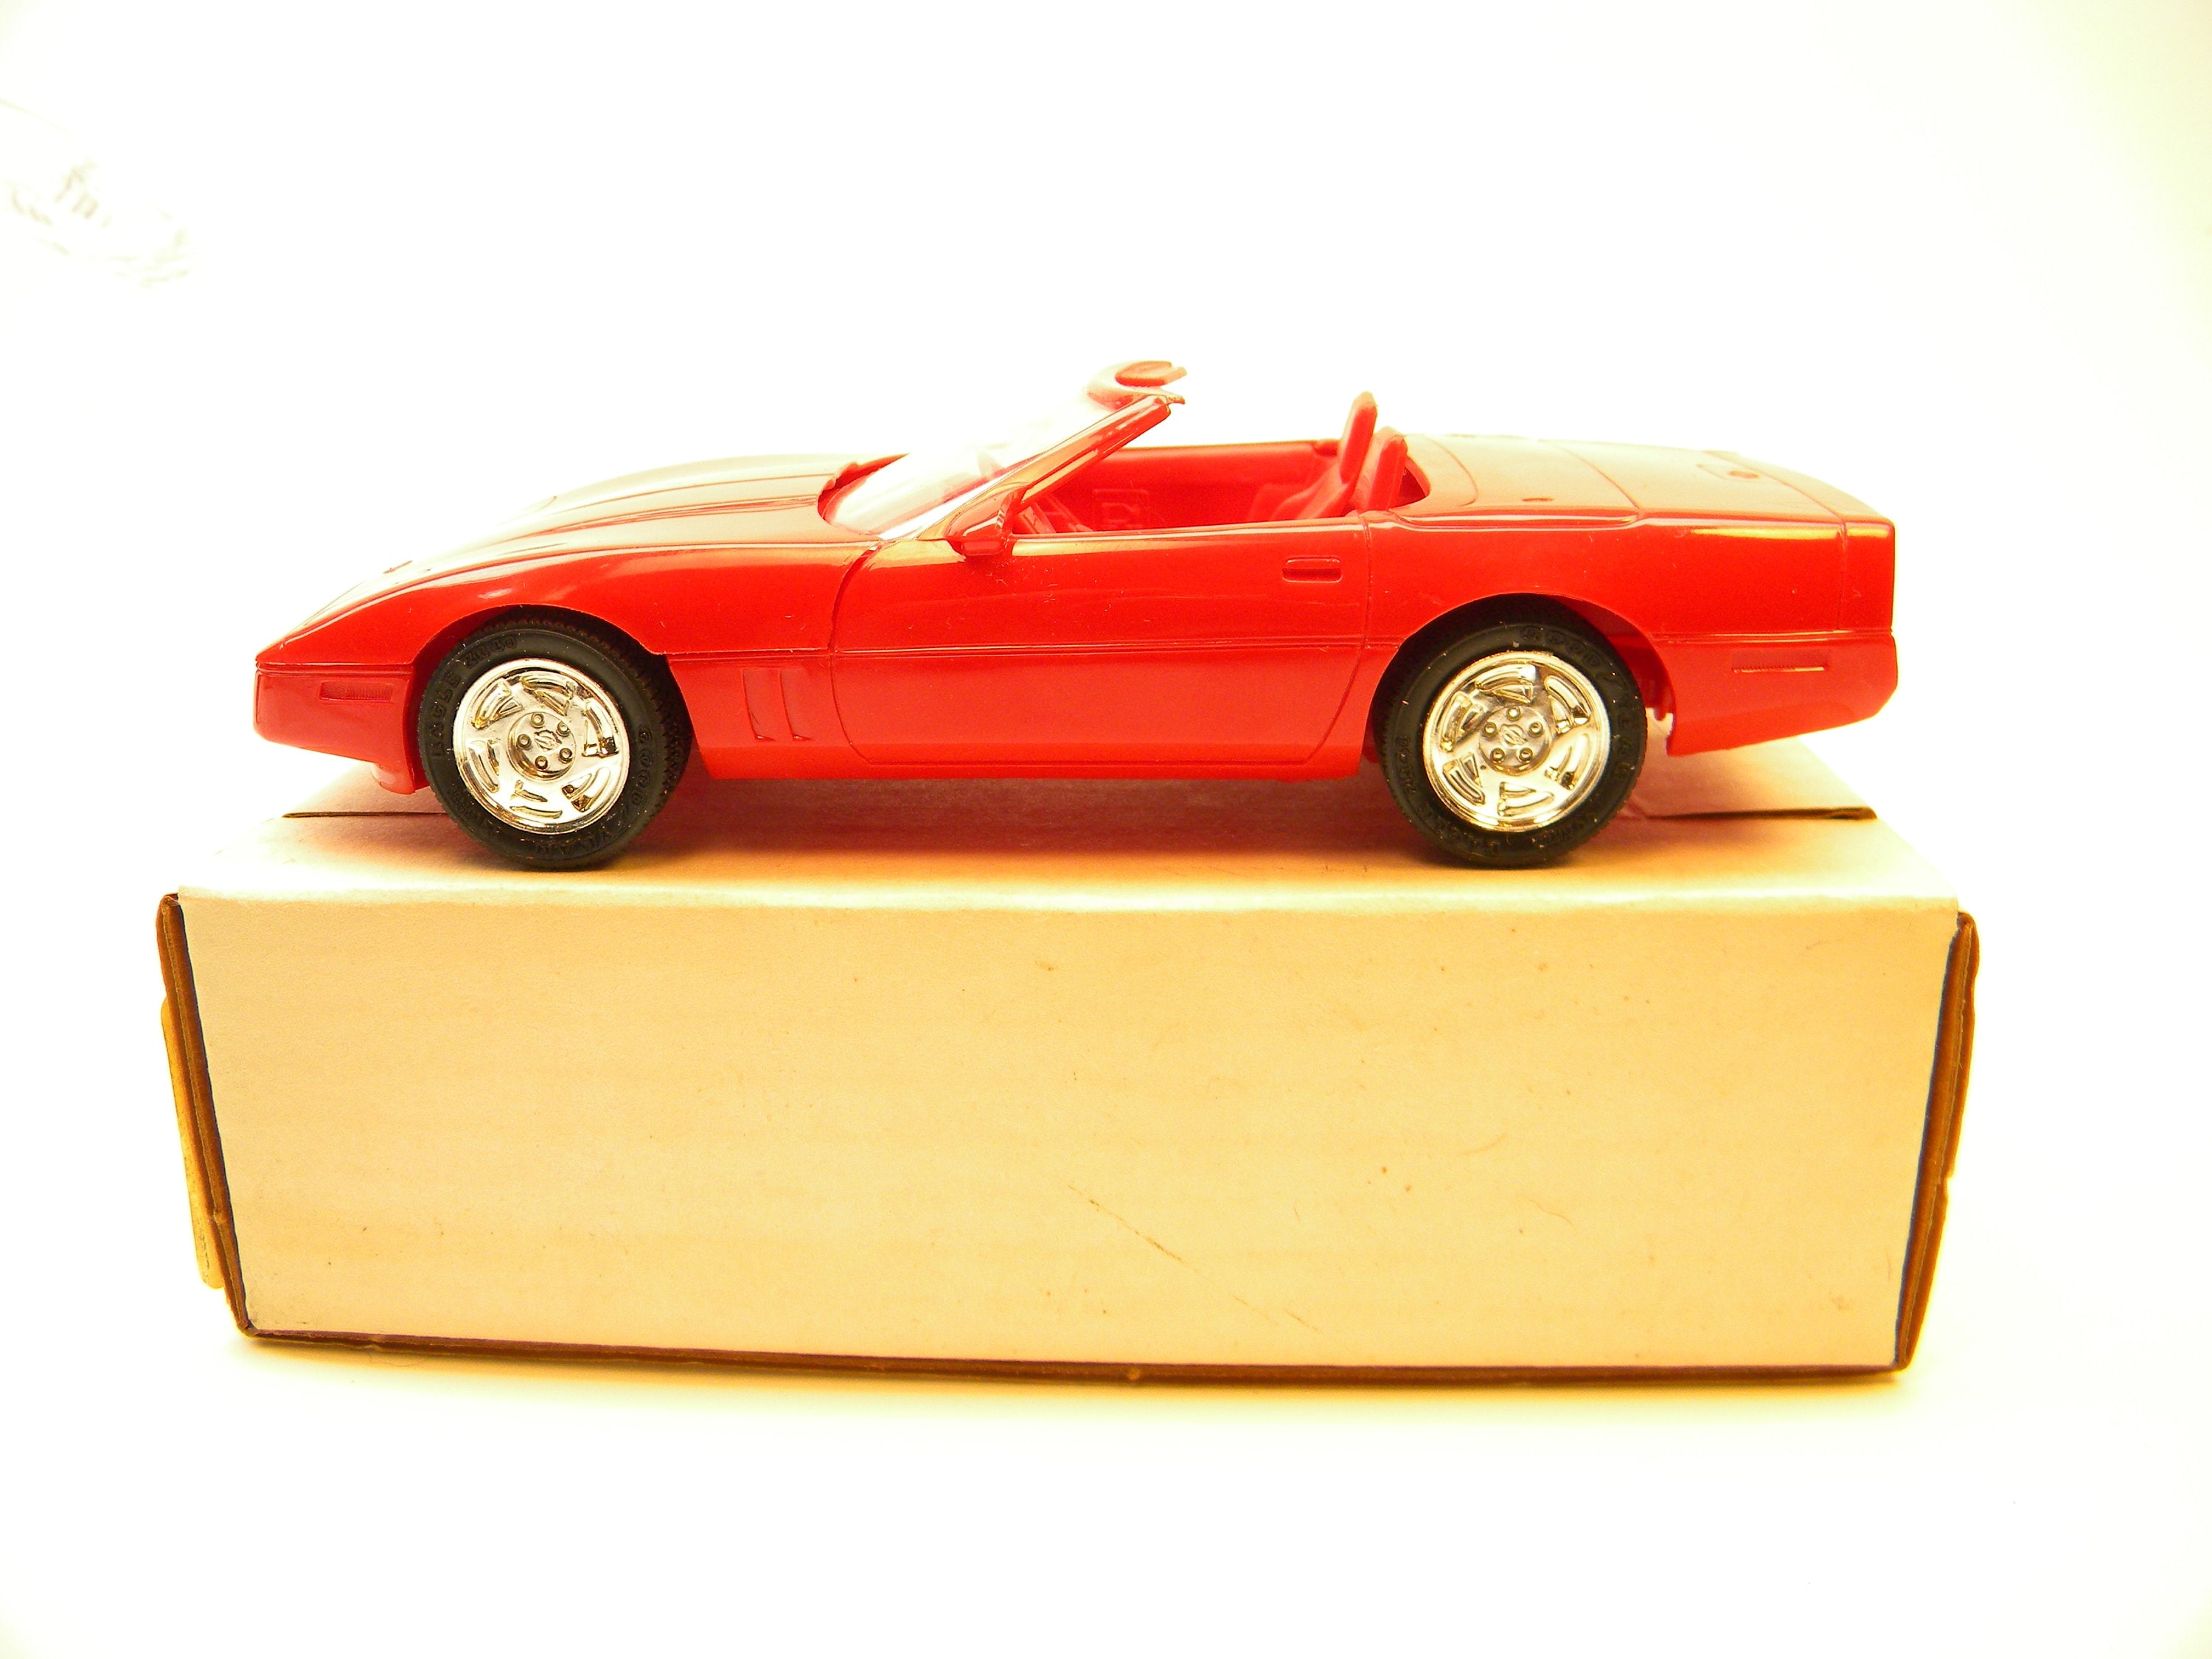 AMT ERTL 1990 Chevy Corvette Convertible Bright Red #6044 C4 Dealer Promo Car for sale online